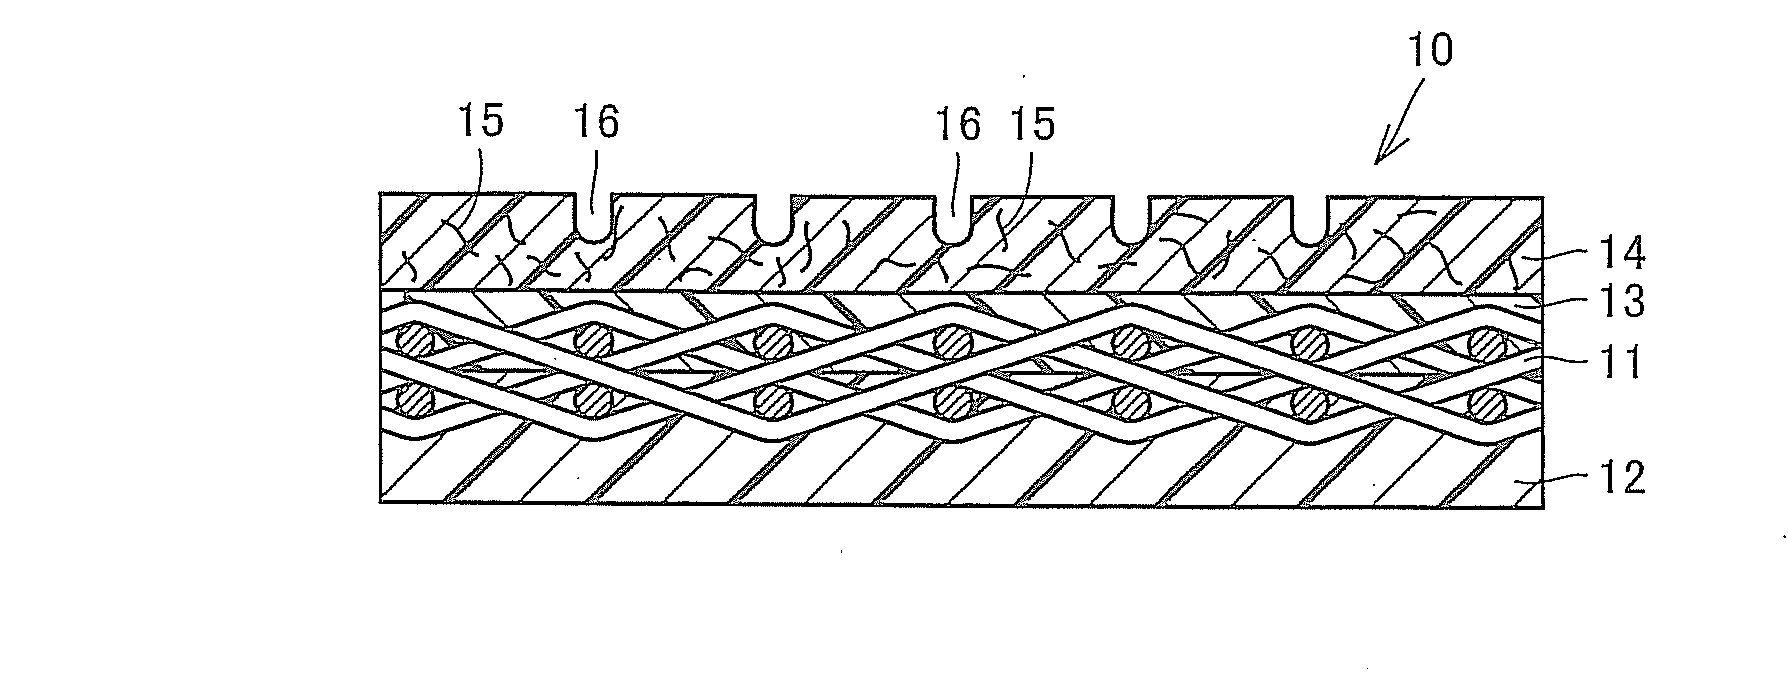 Papermaking belt